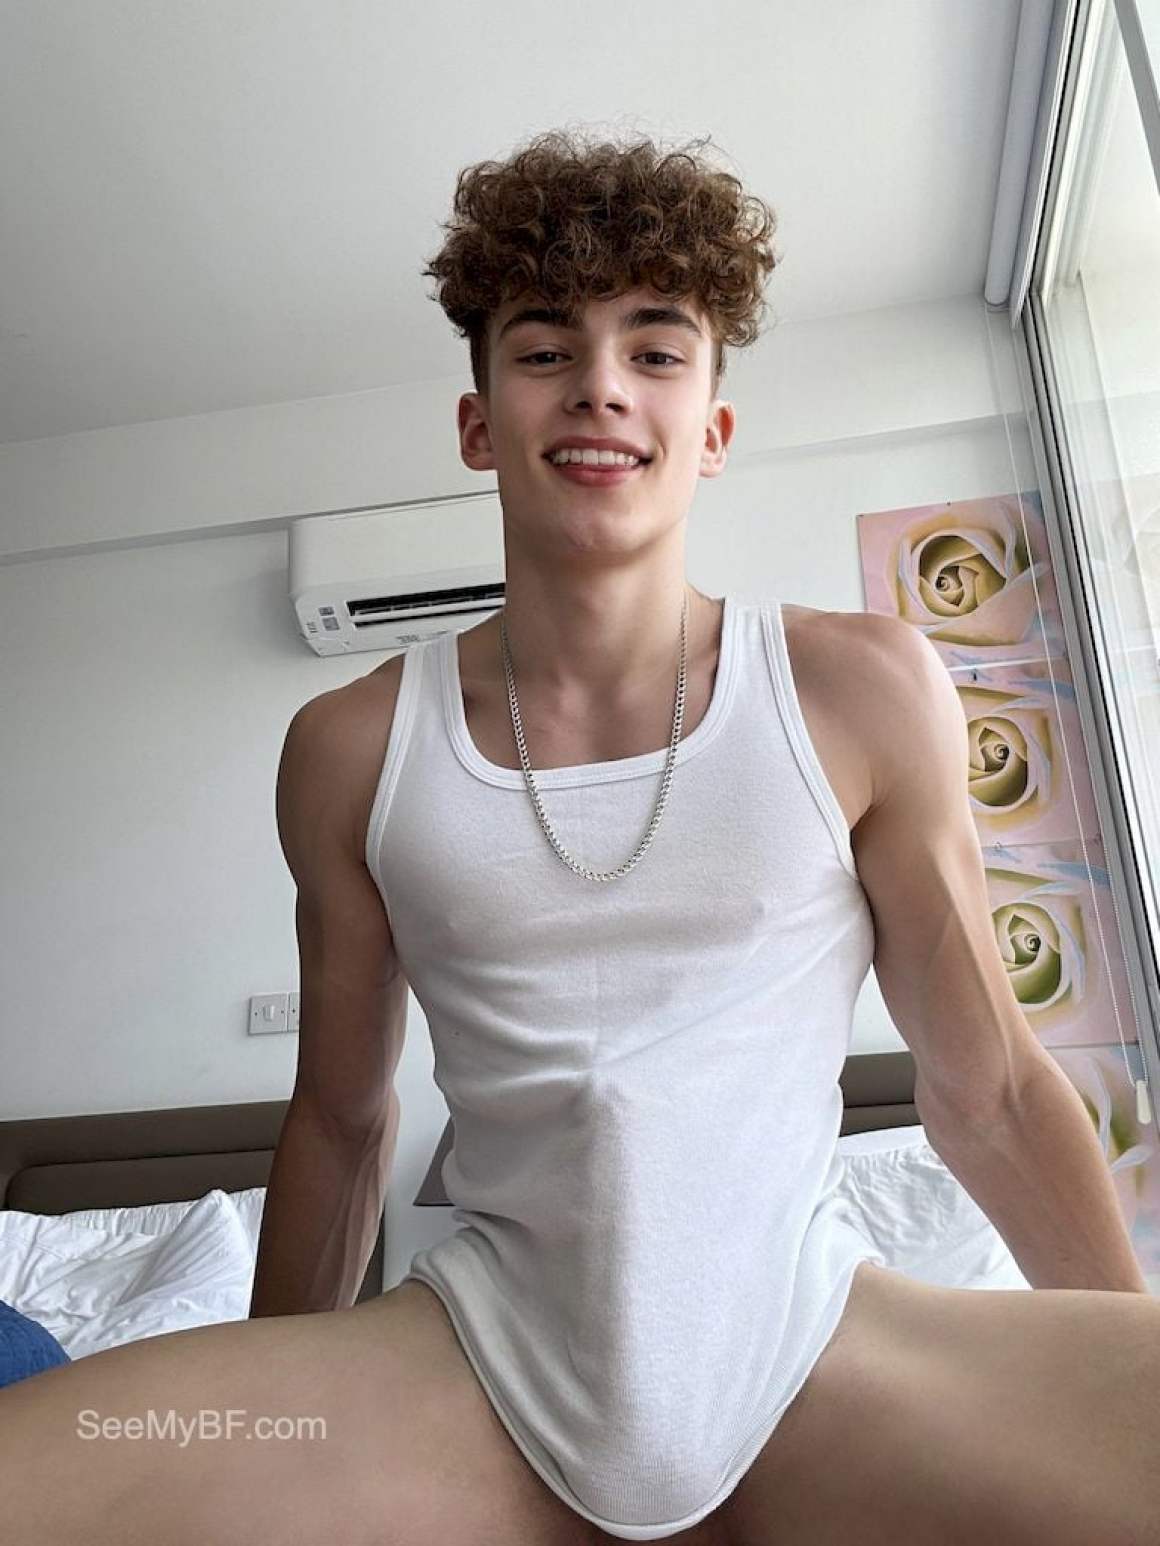 doug herman add teens naked on instagram photo